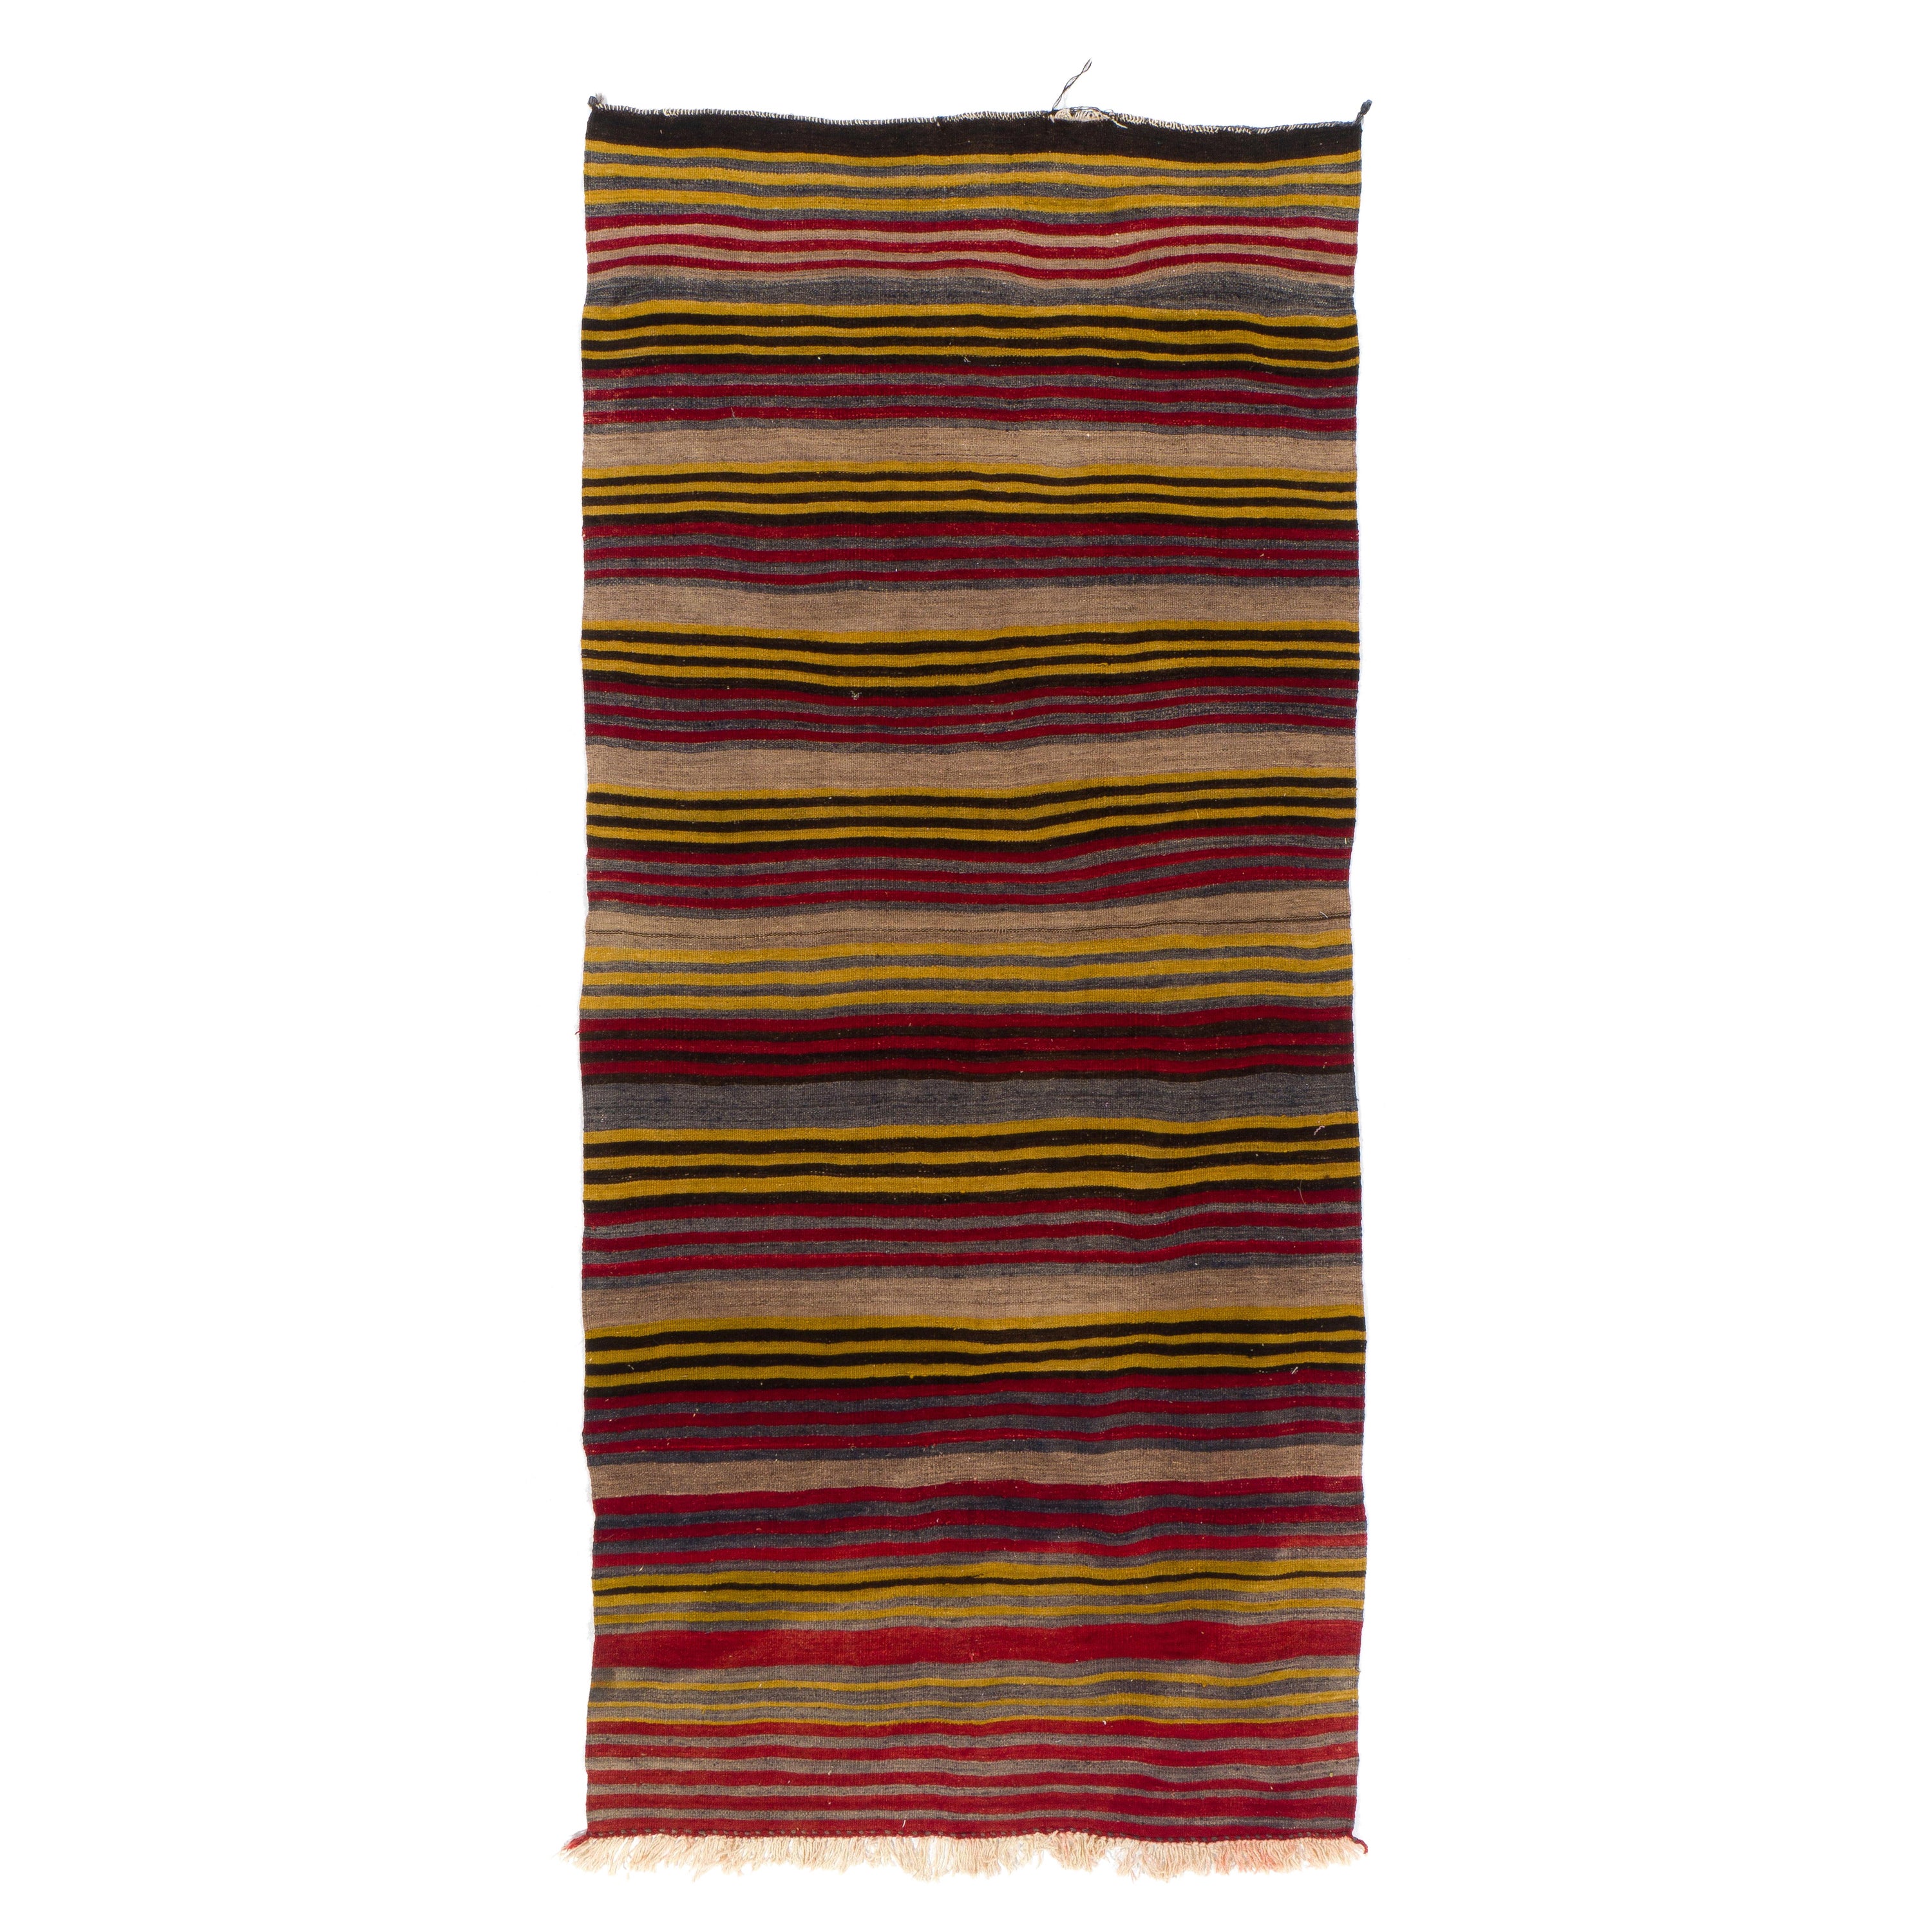 5.2x11.2 Ft Striped Handwoven Wool Kilim / Flat-weave, Reversible Runner Rug